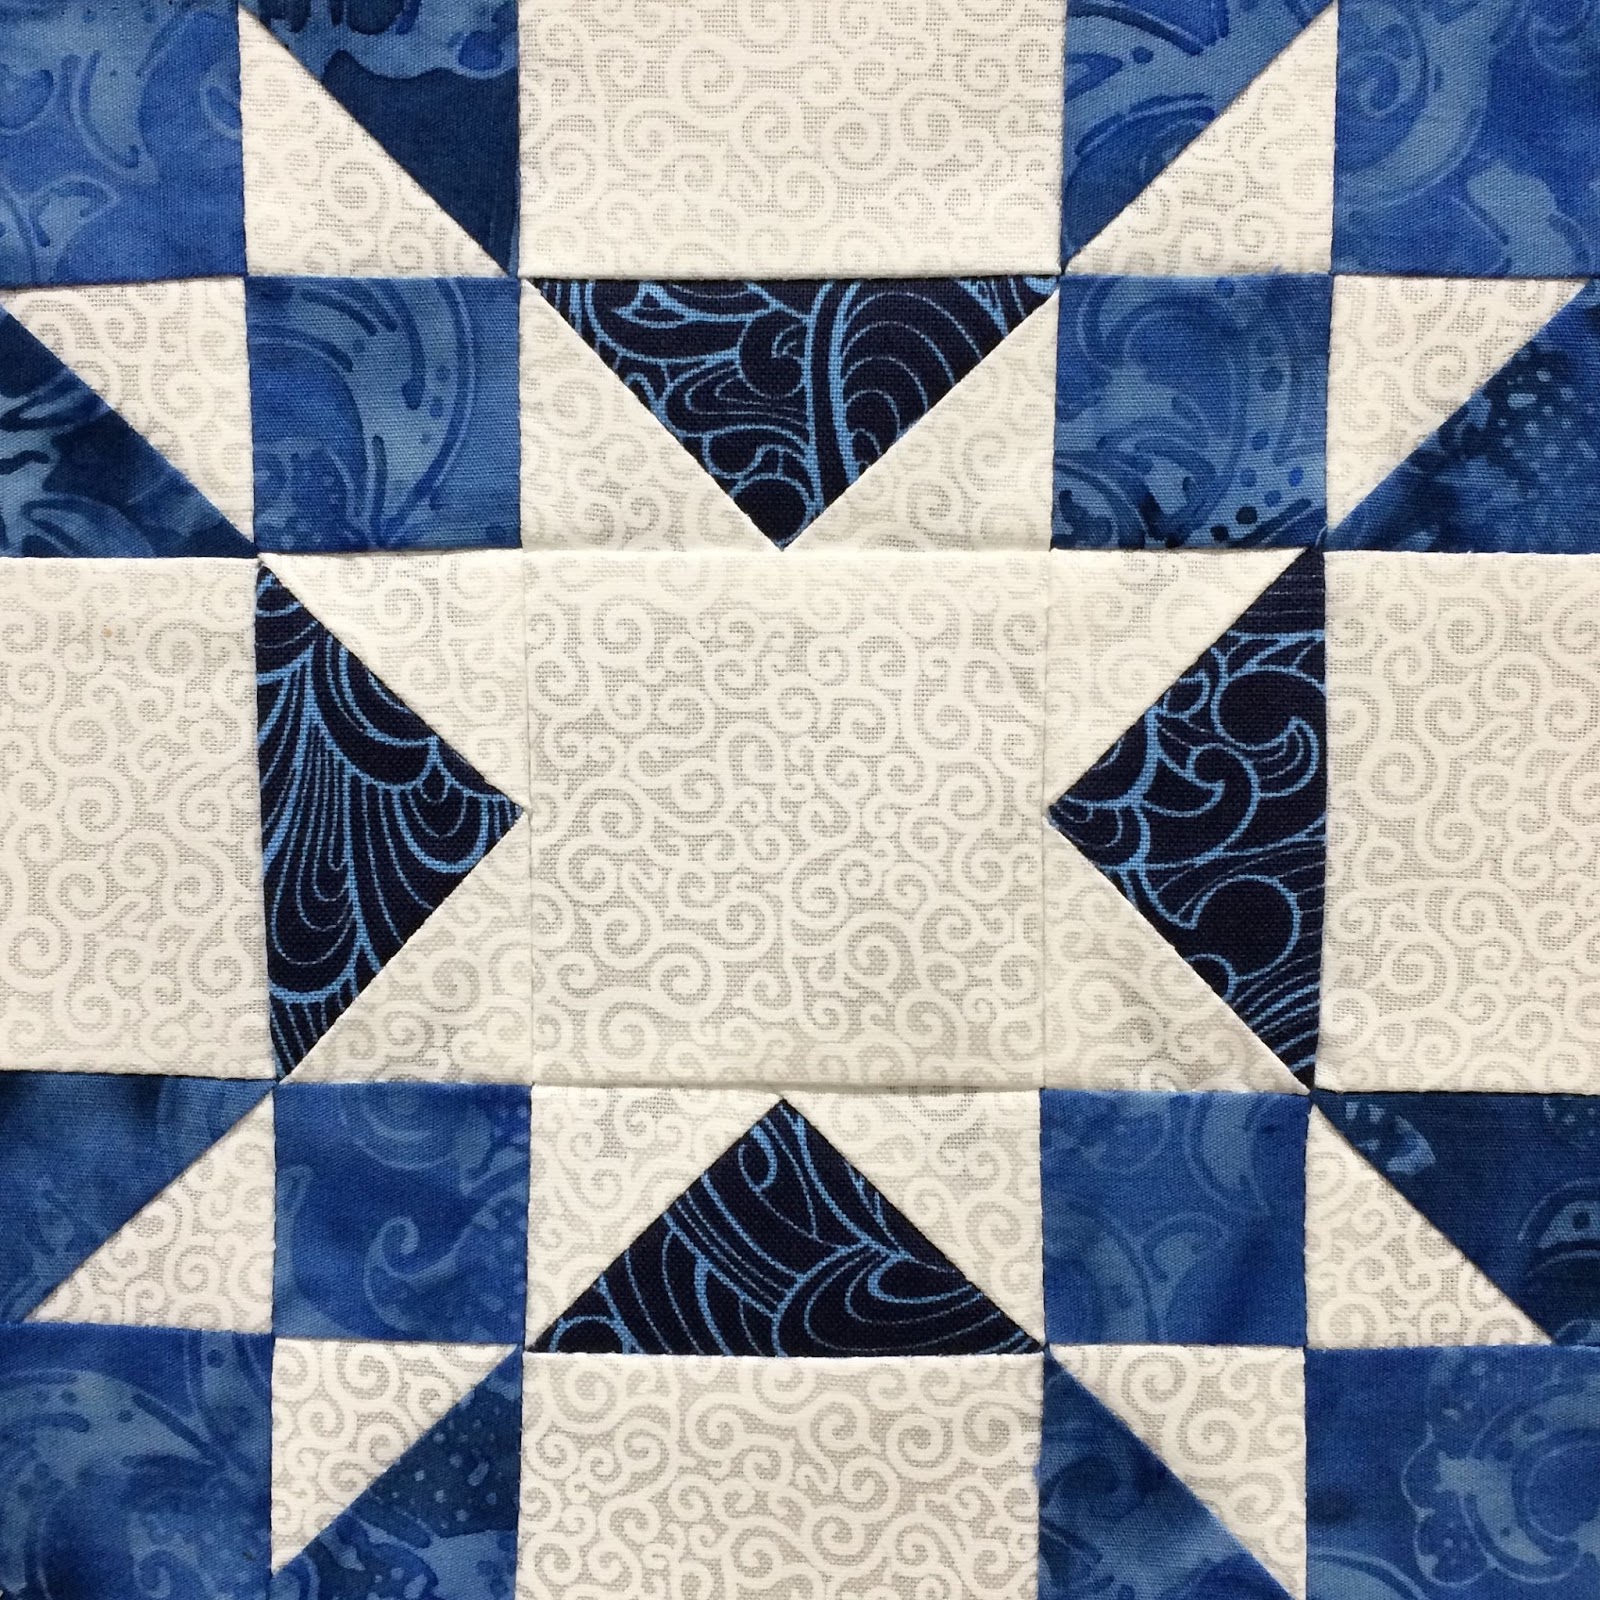 hand-made-karma-blue-white-sampler-six-inch-blocks